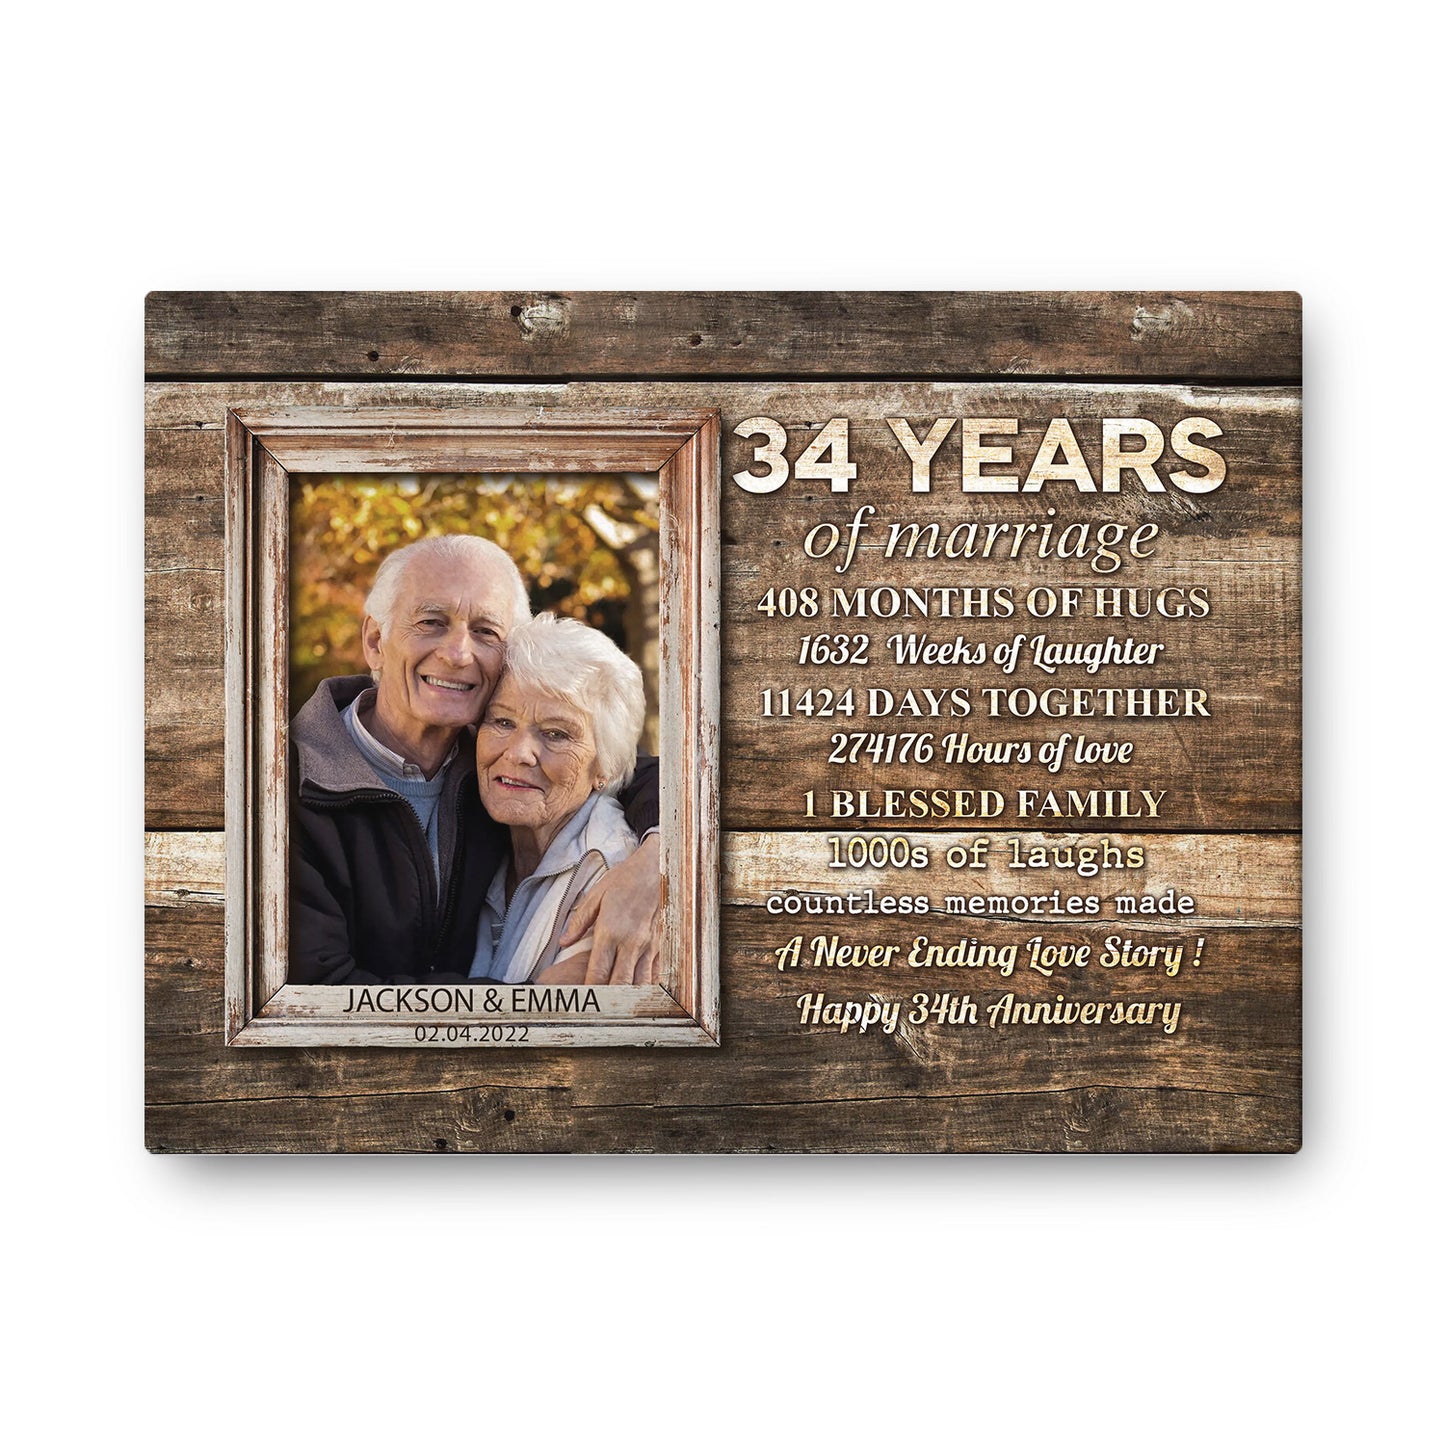 34 Years Of Marriage Custom Image Anniversary Canvas